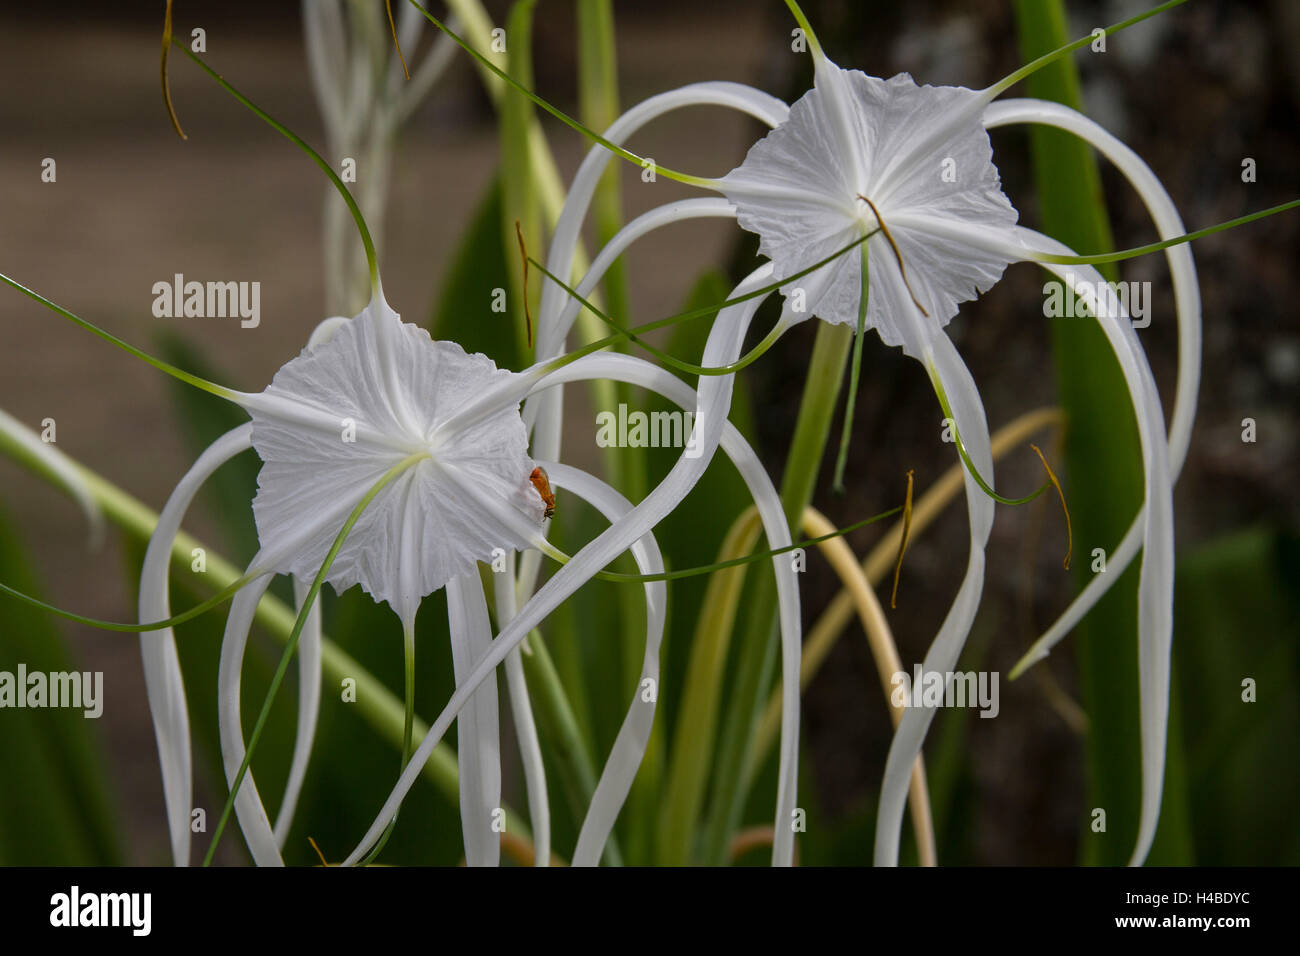 Spider lily Hymenocallis Stock Photo